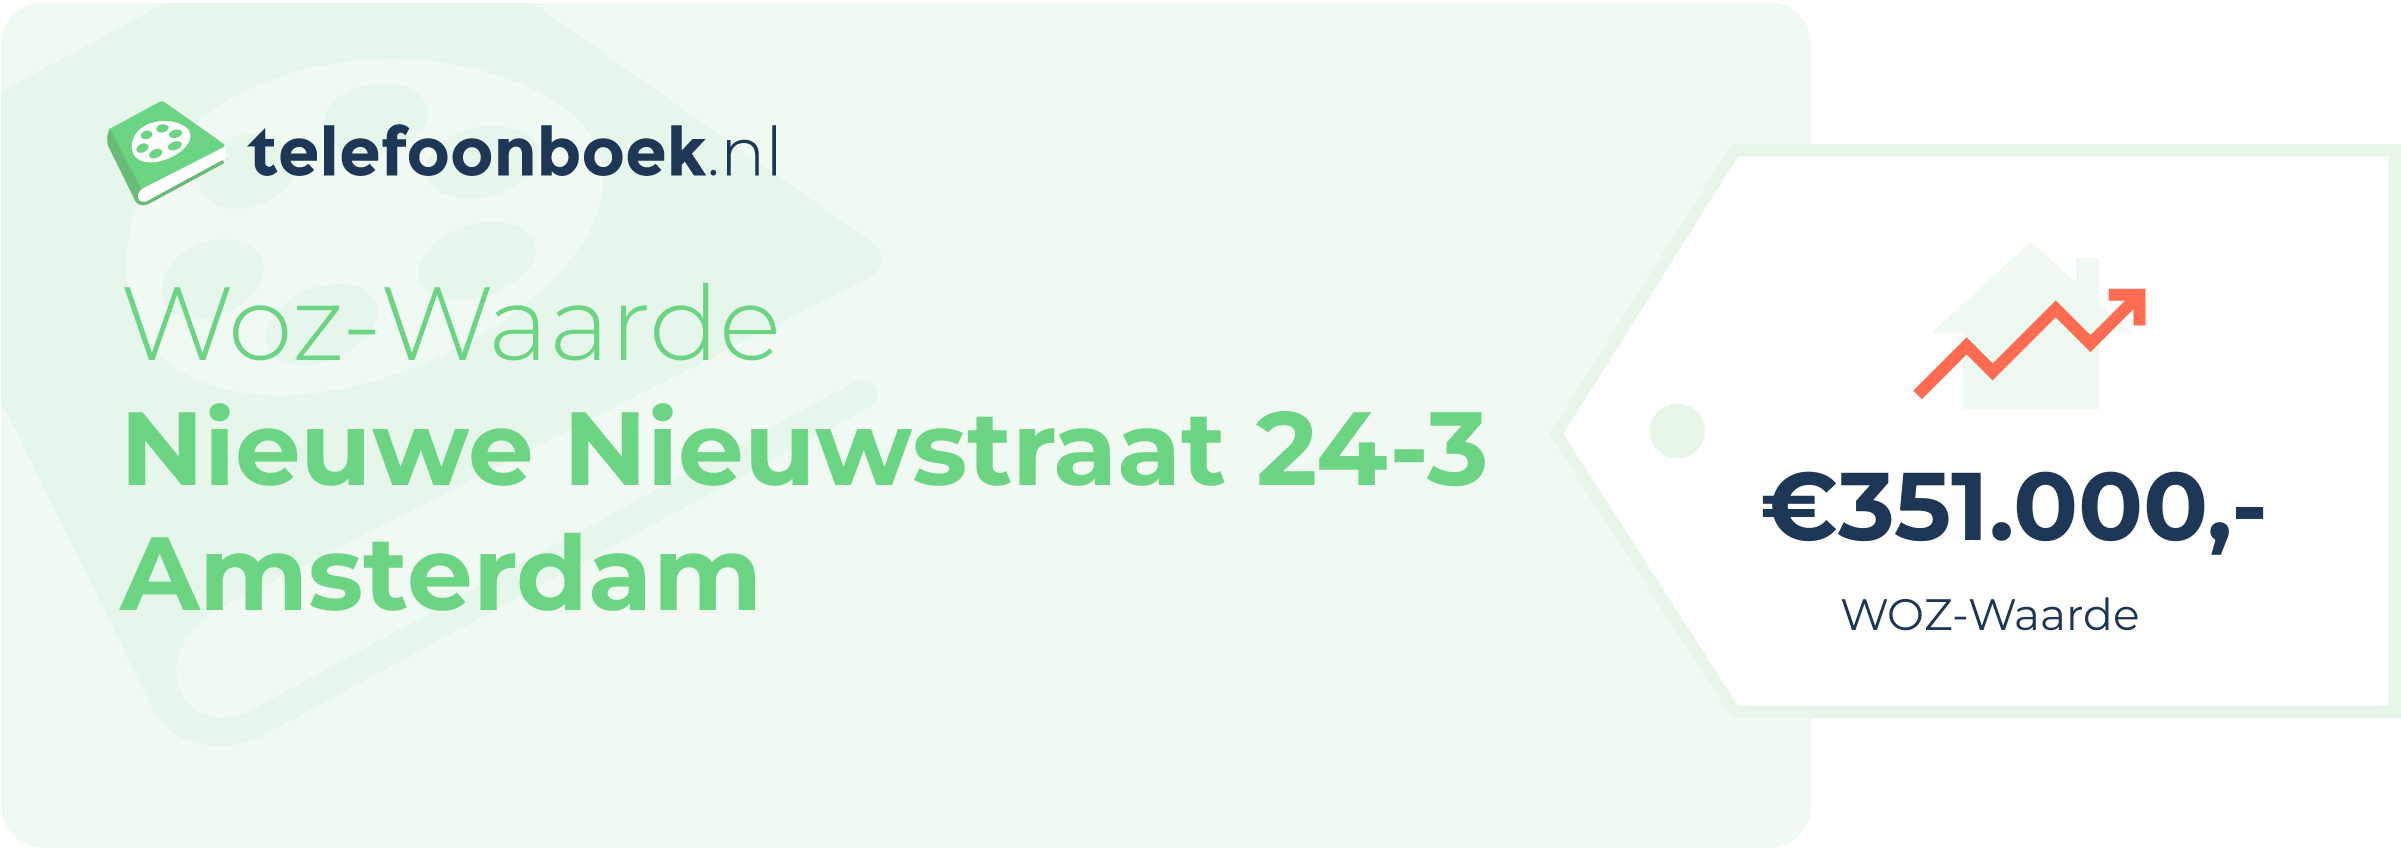 WOZ-waarde Nieuwe Nieuwstraat 24-3 Amsterdam